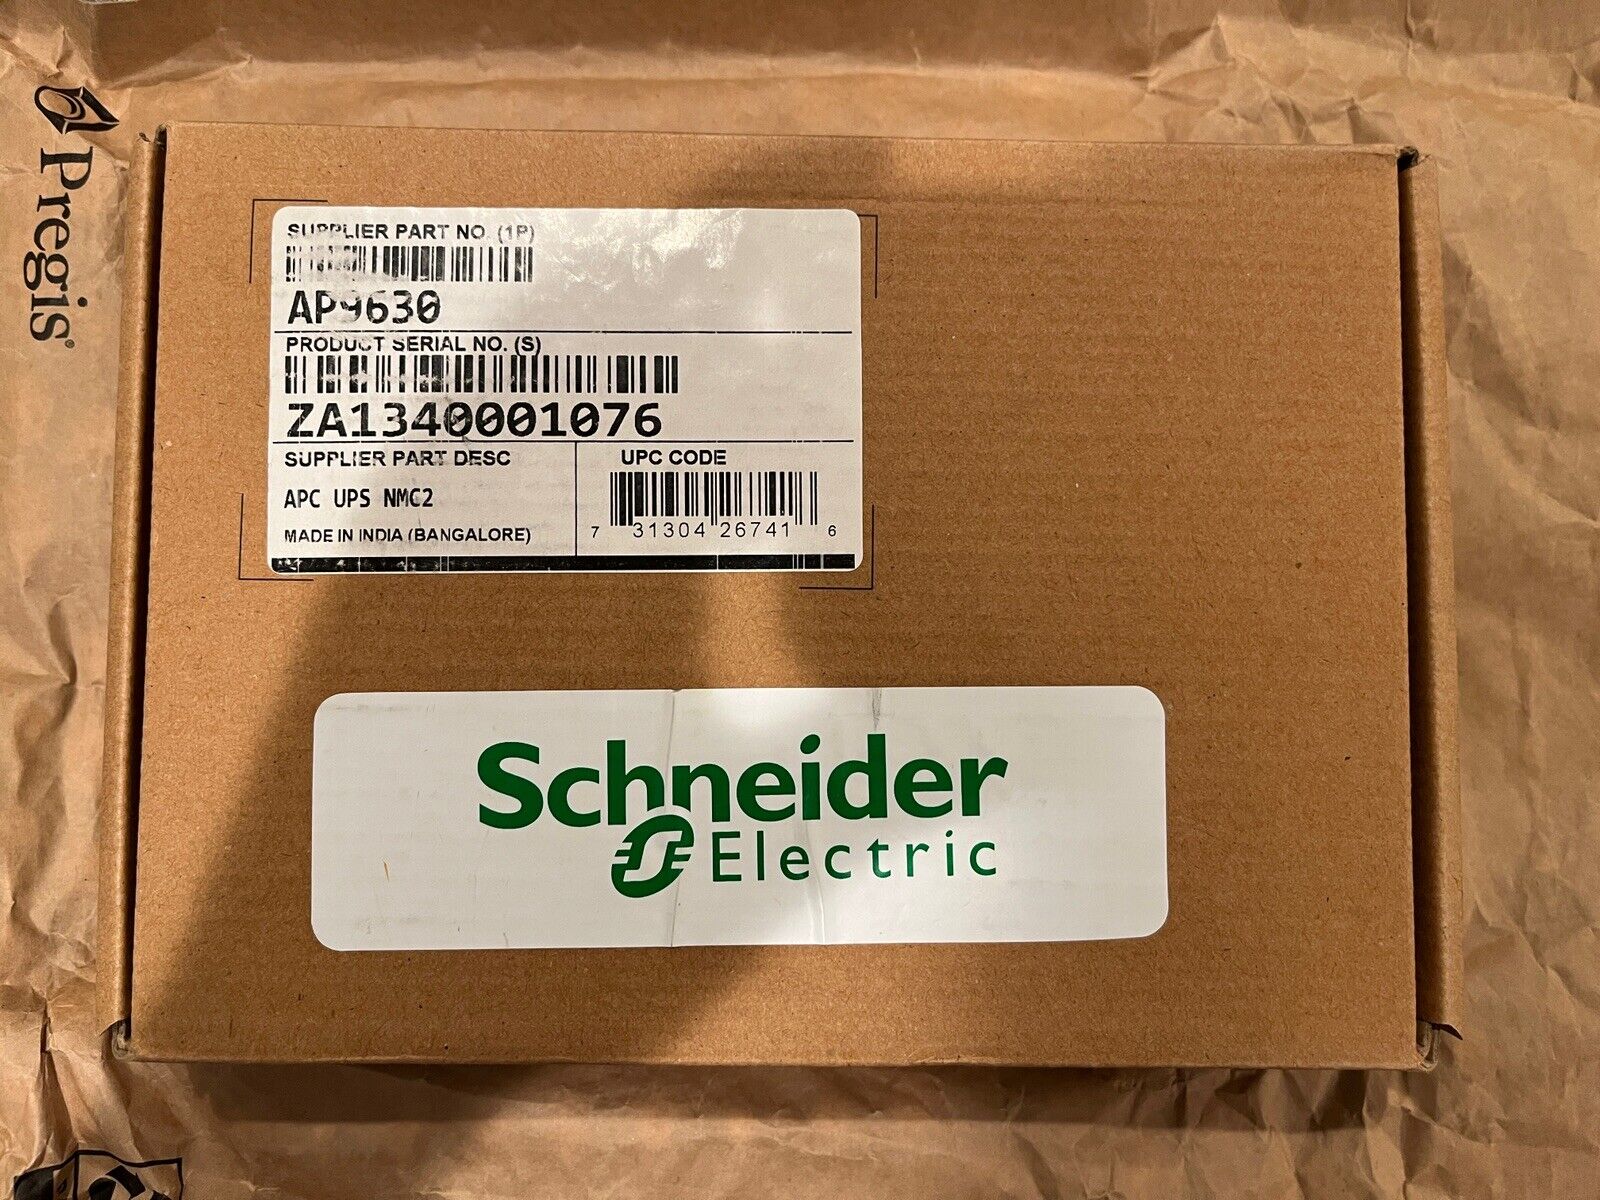 APC Schneider Electric Smart Slot AP9630 UPS Network Management Card 2